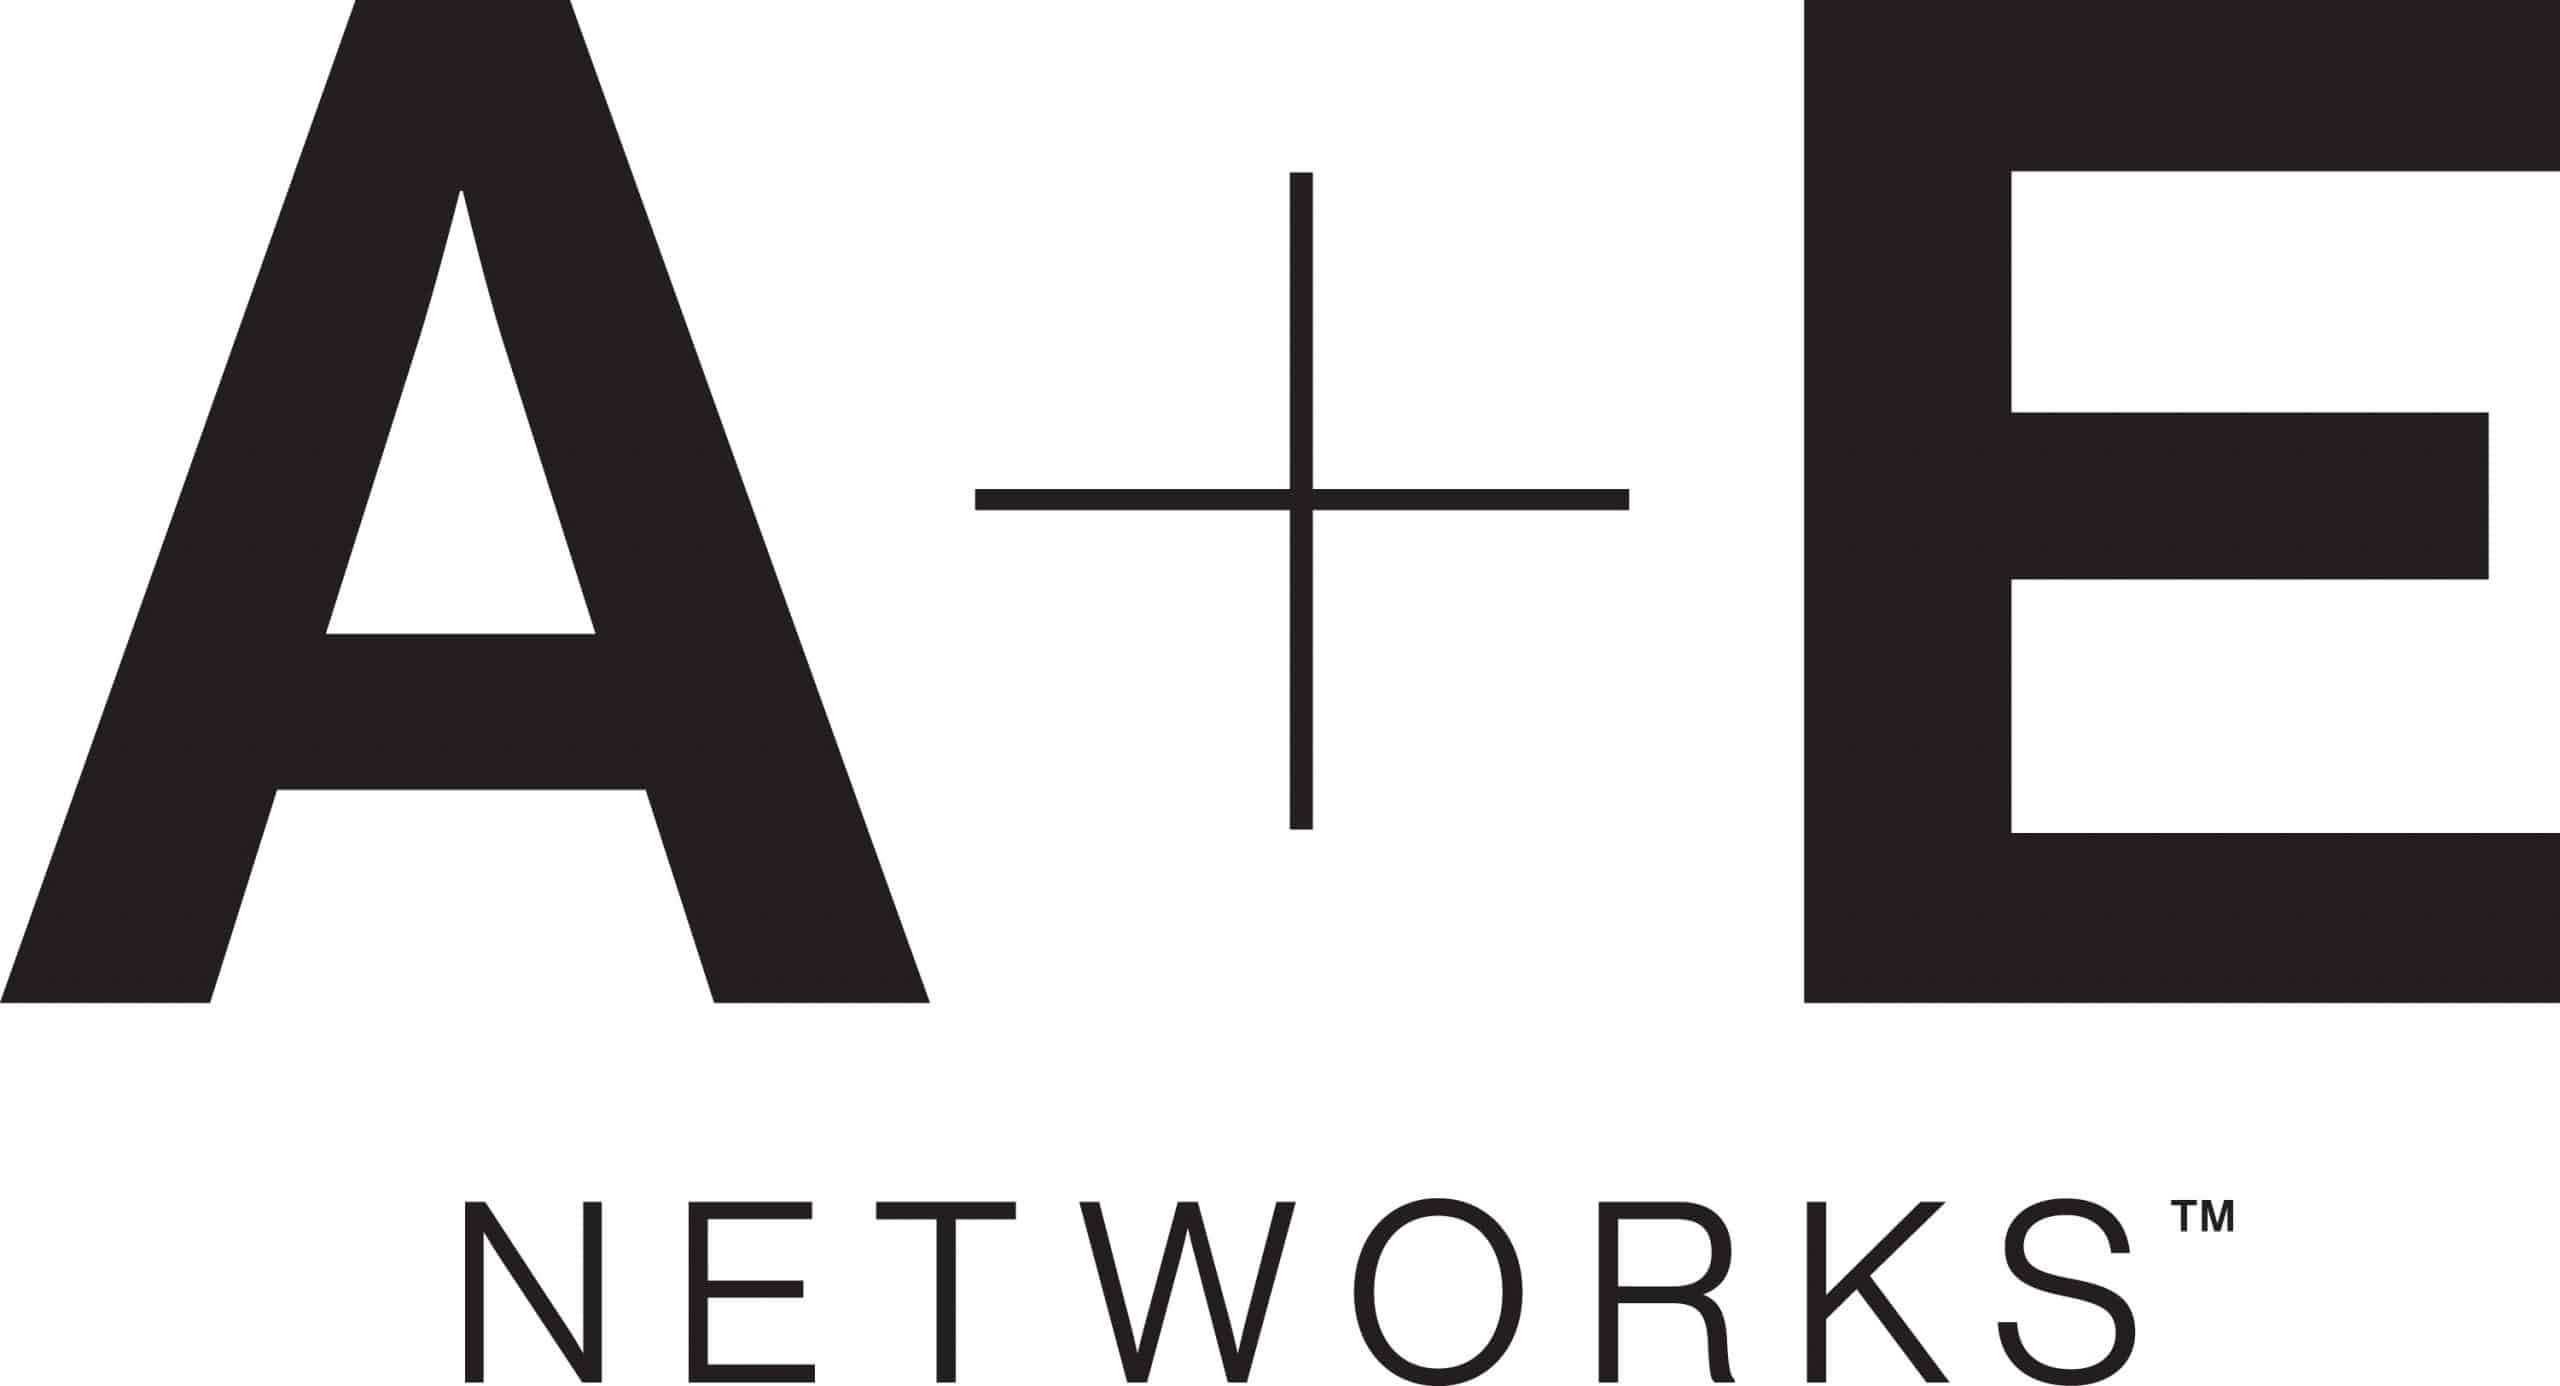 A+E Networks logo